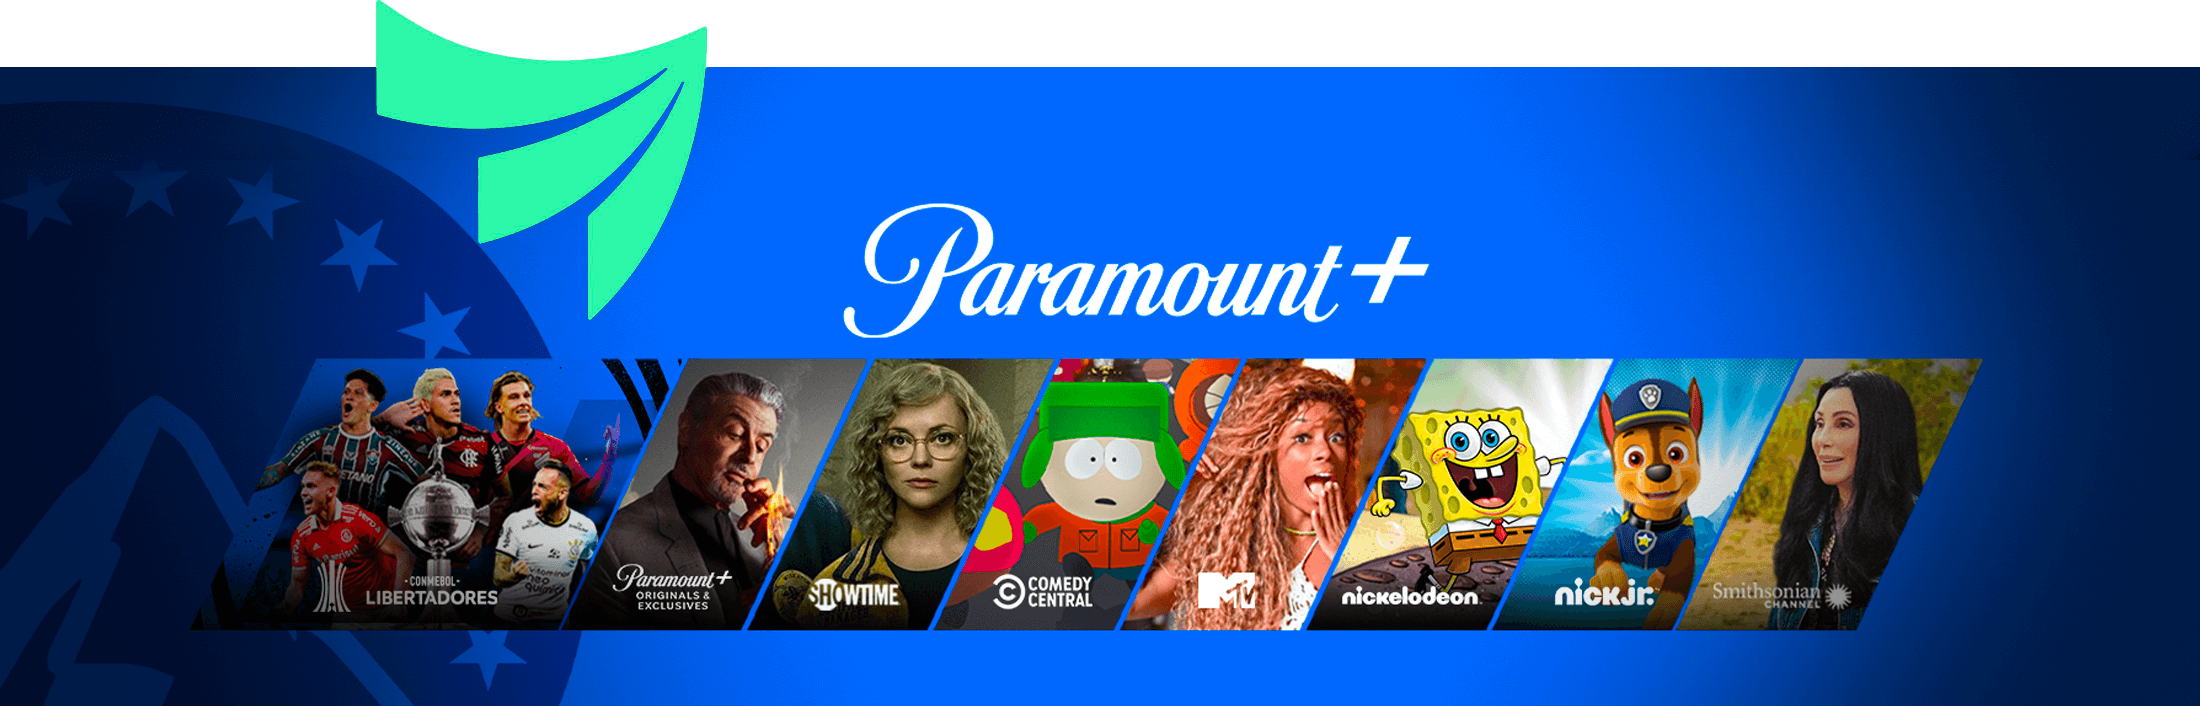 Banner Paramount+